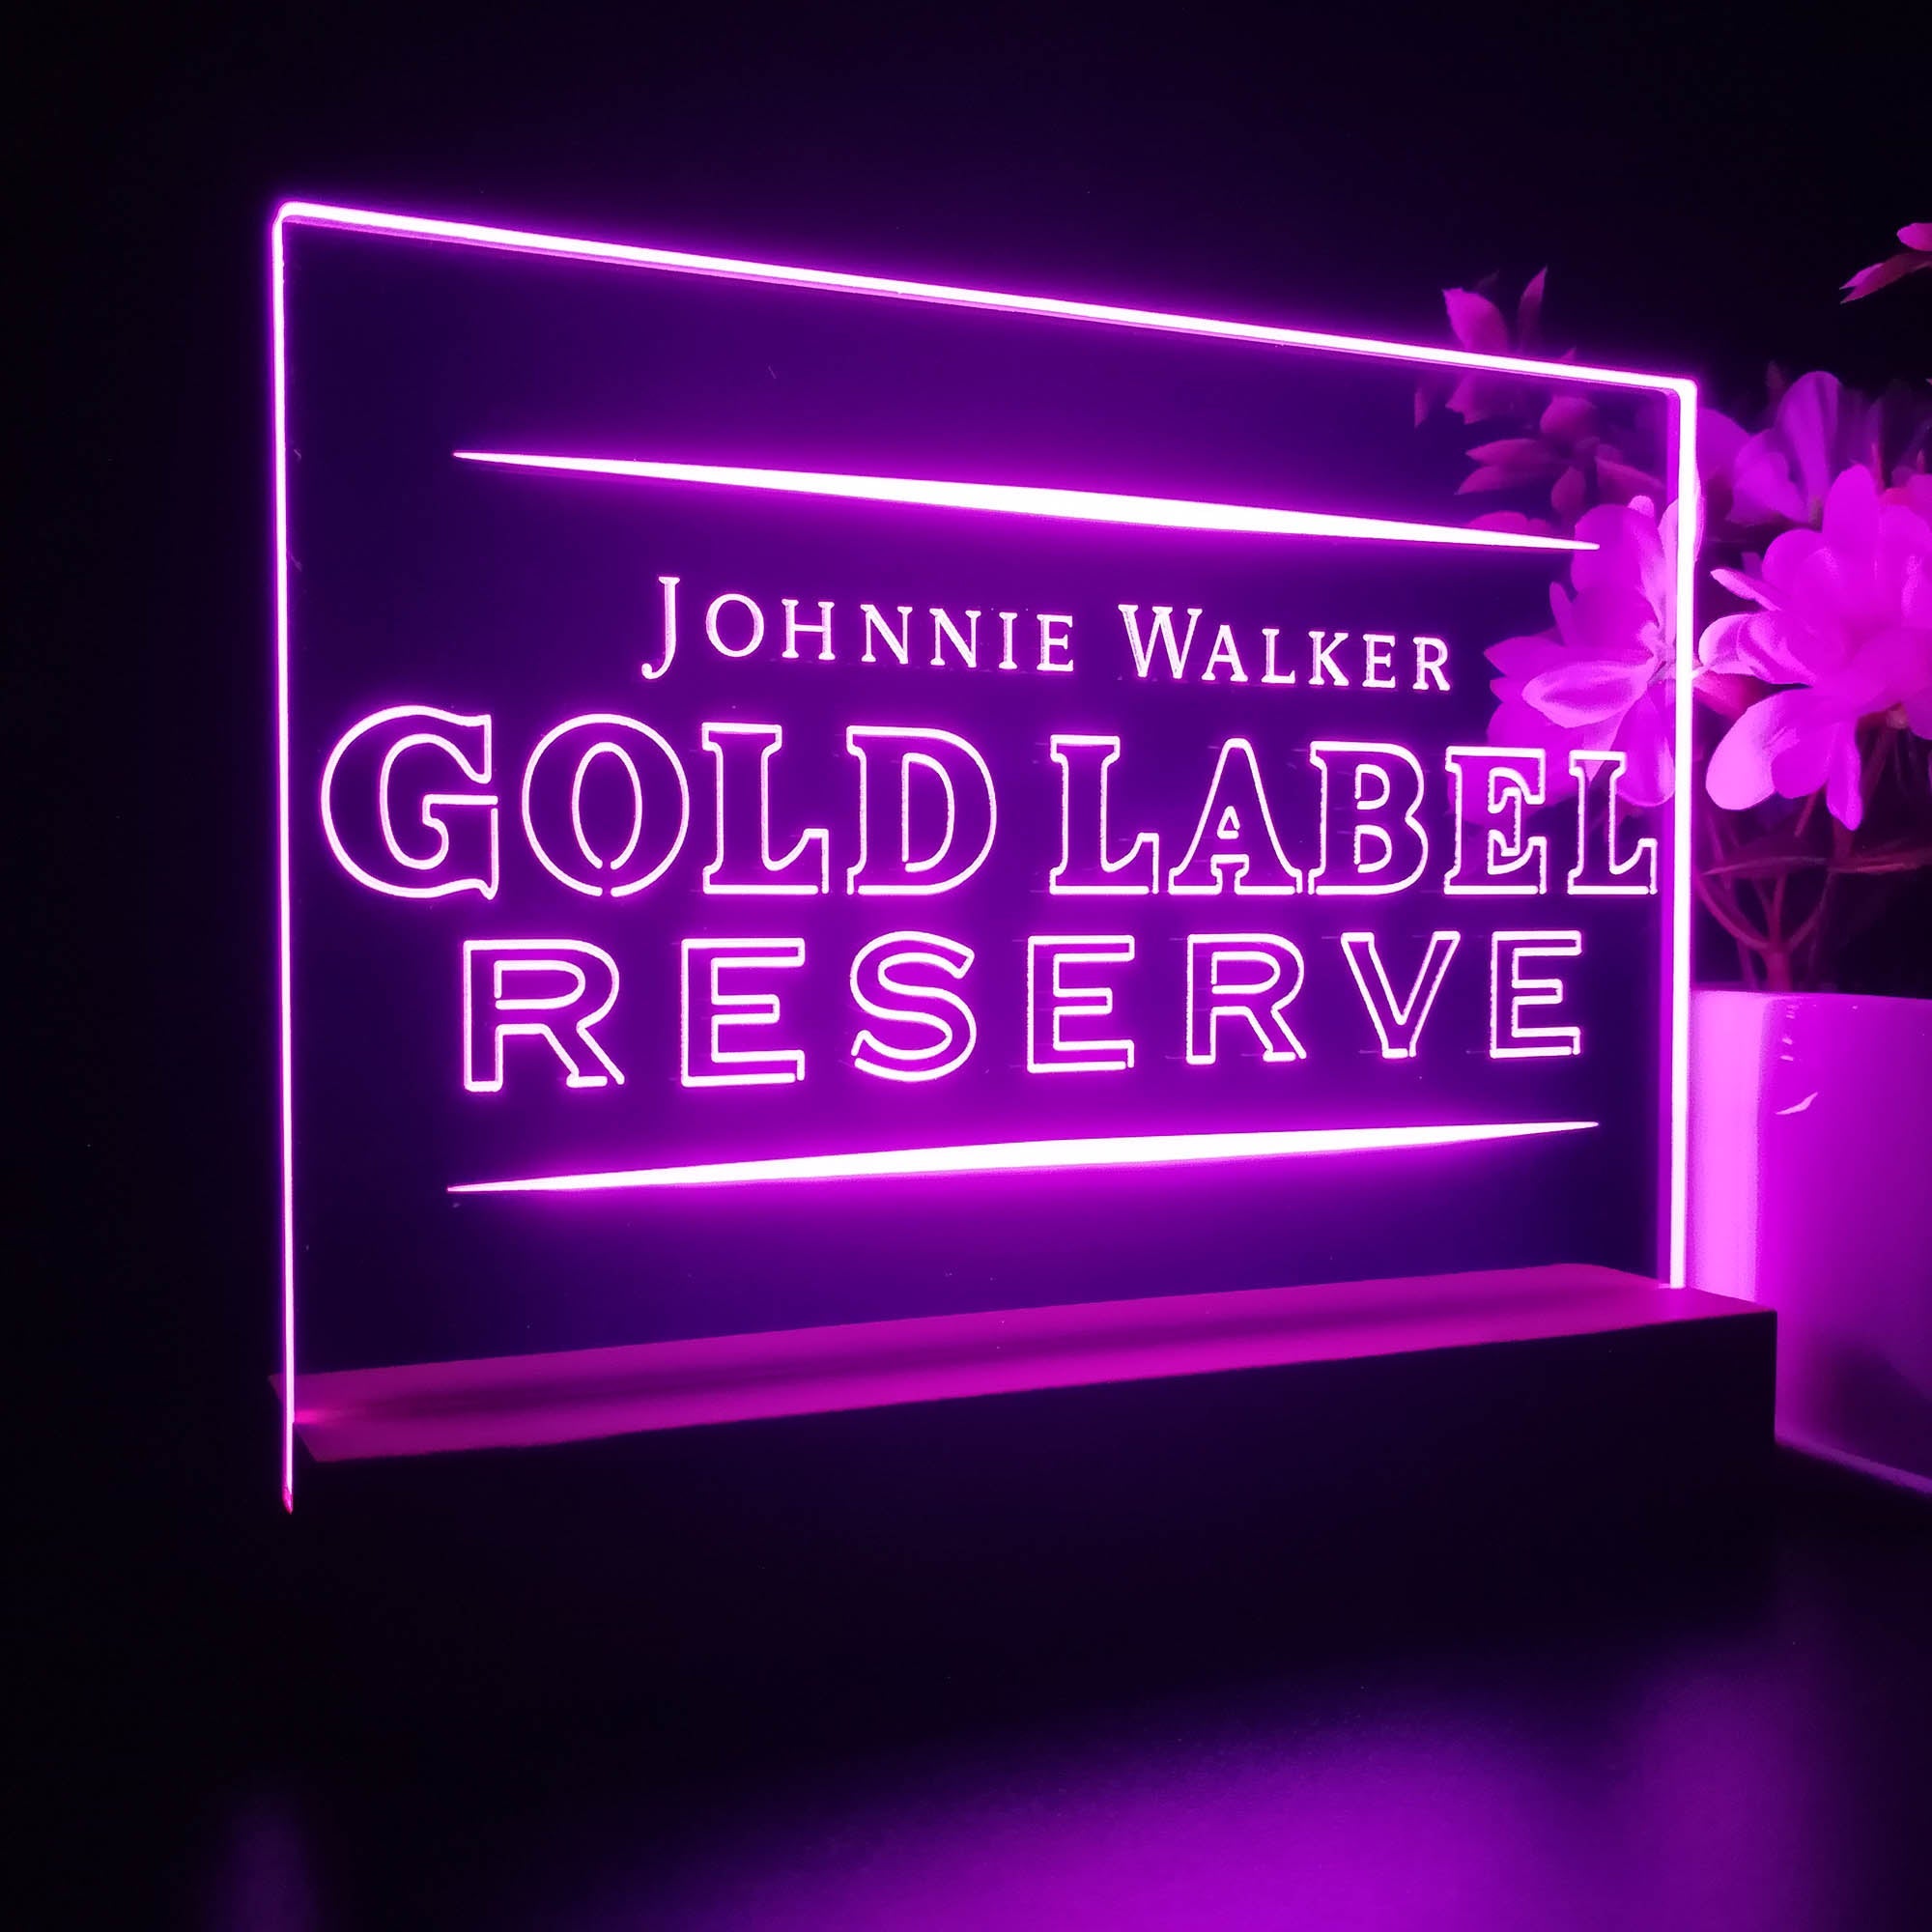 Johnnie Walker Gold Label Reserve Neon Sign Pub Bar Decor Lamp